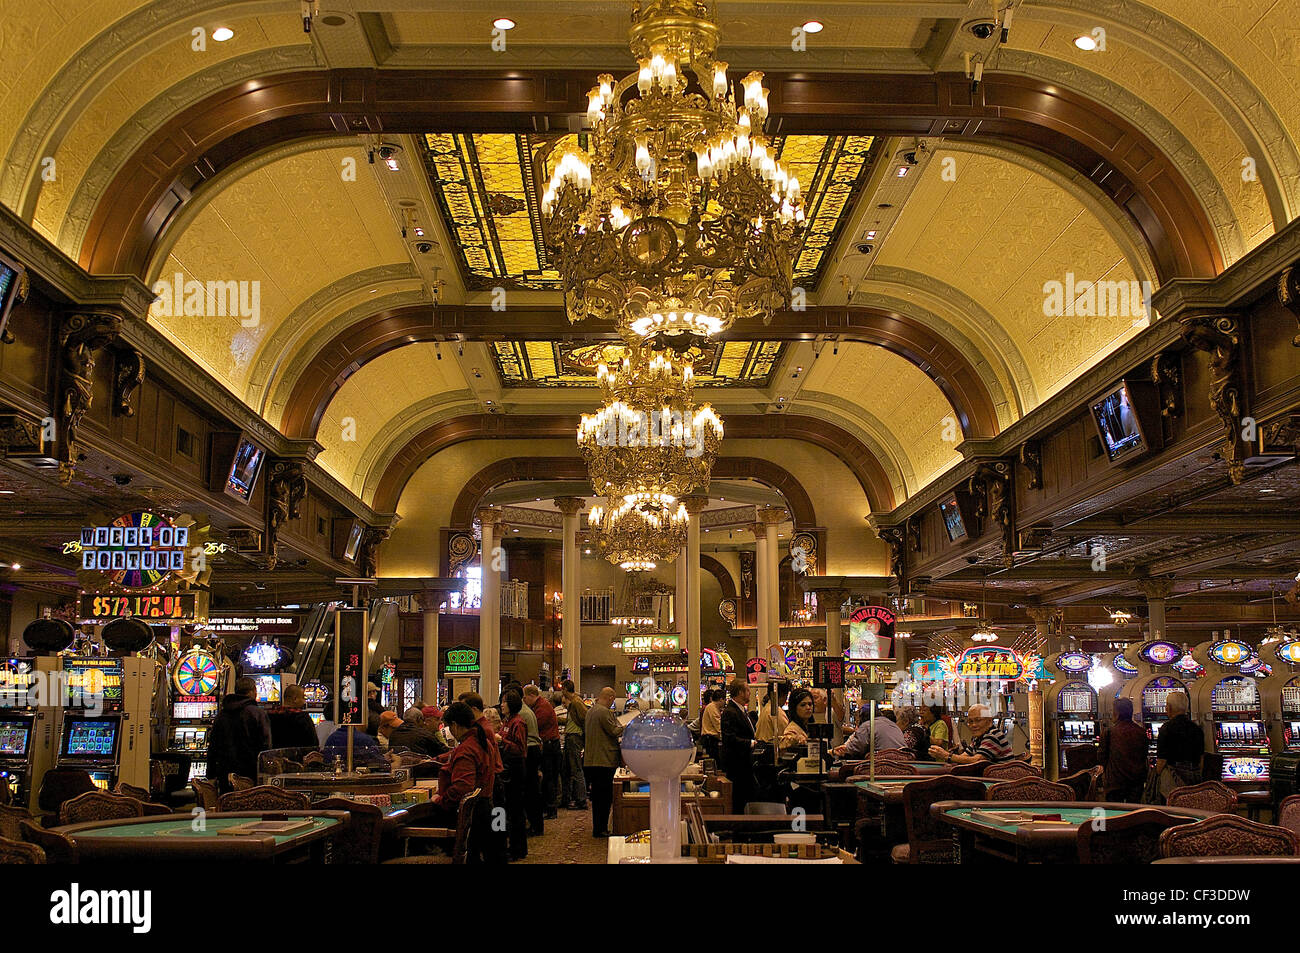 Main Street Station casino in downtown Las Vegas Stock Photo - Alamy